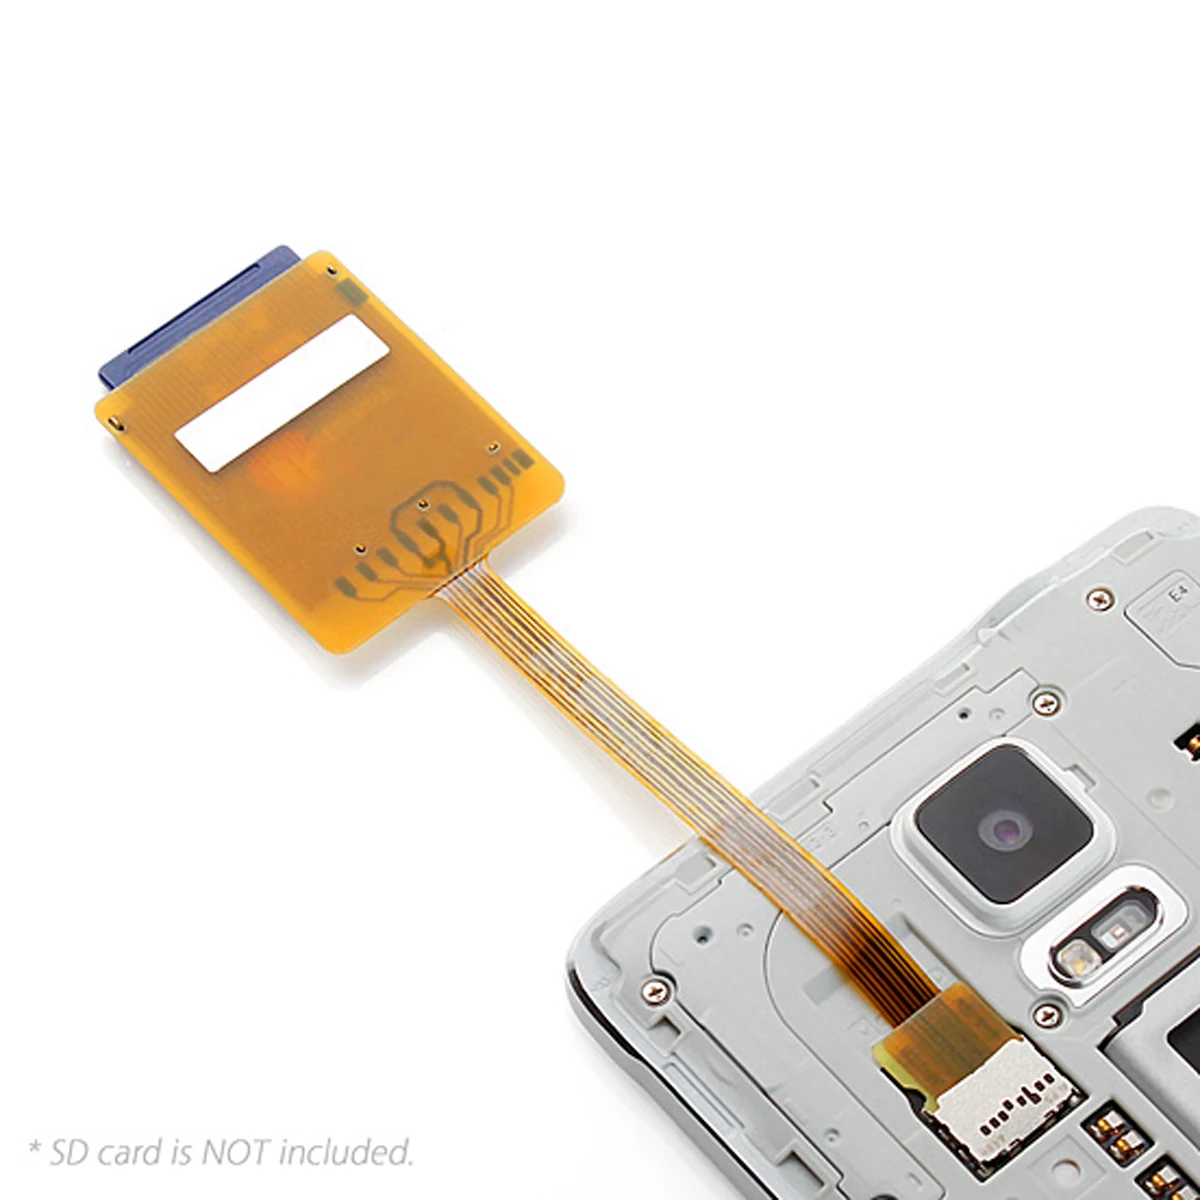 Chenyang-Cable CY Micro SD TF набор карт памяти папа к SD Женский удлинитель мягкий плоский FPC кабель удлинитель 10 см